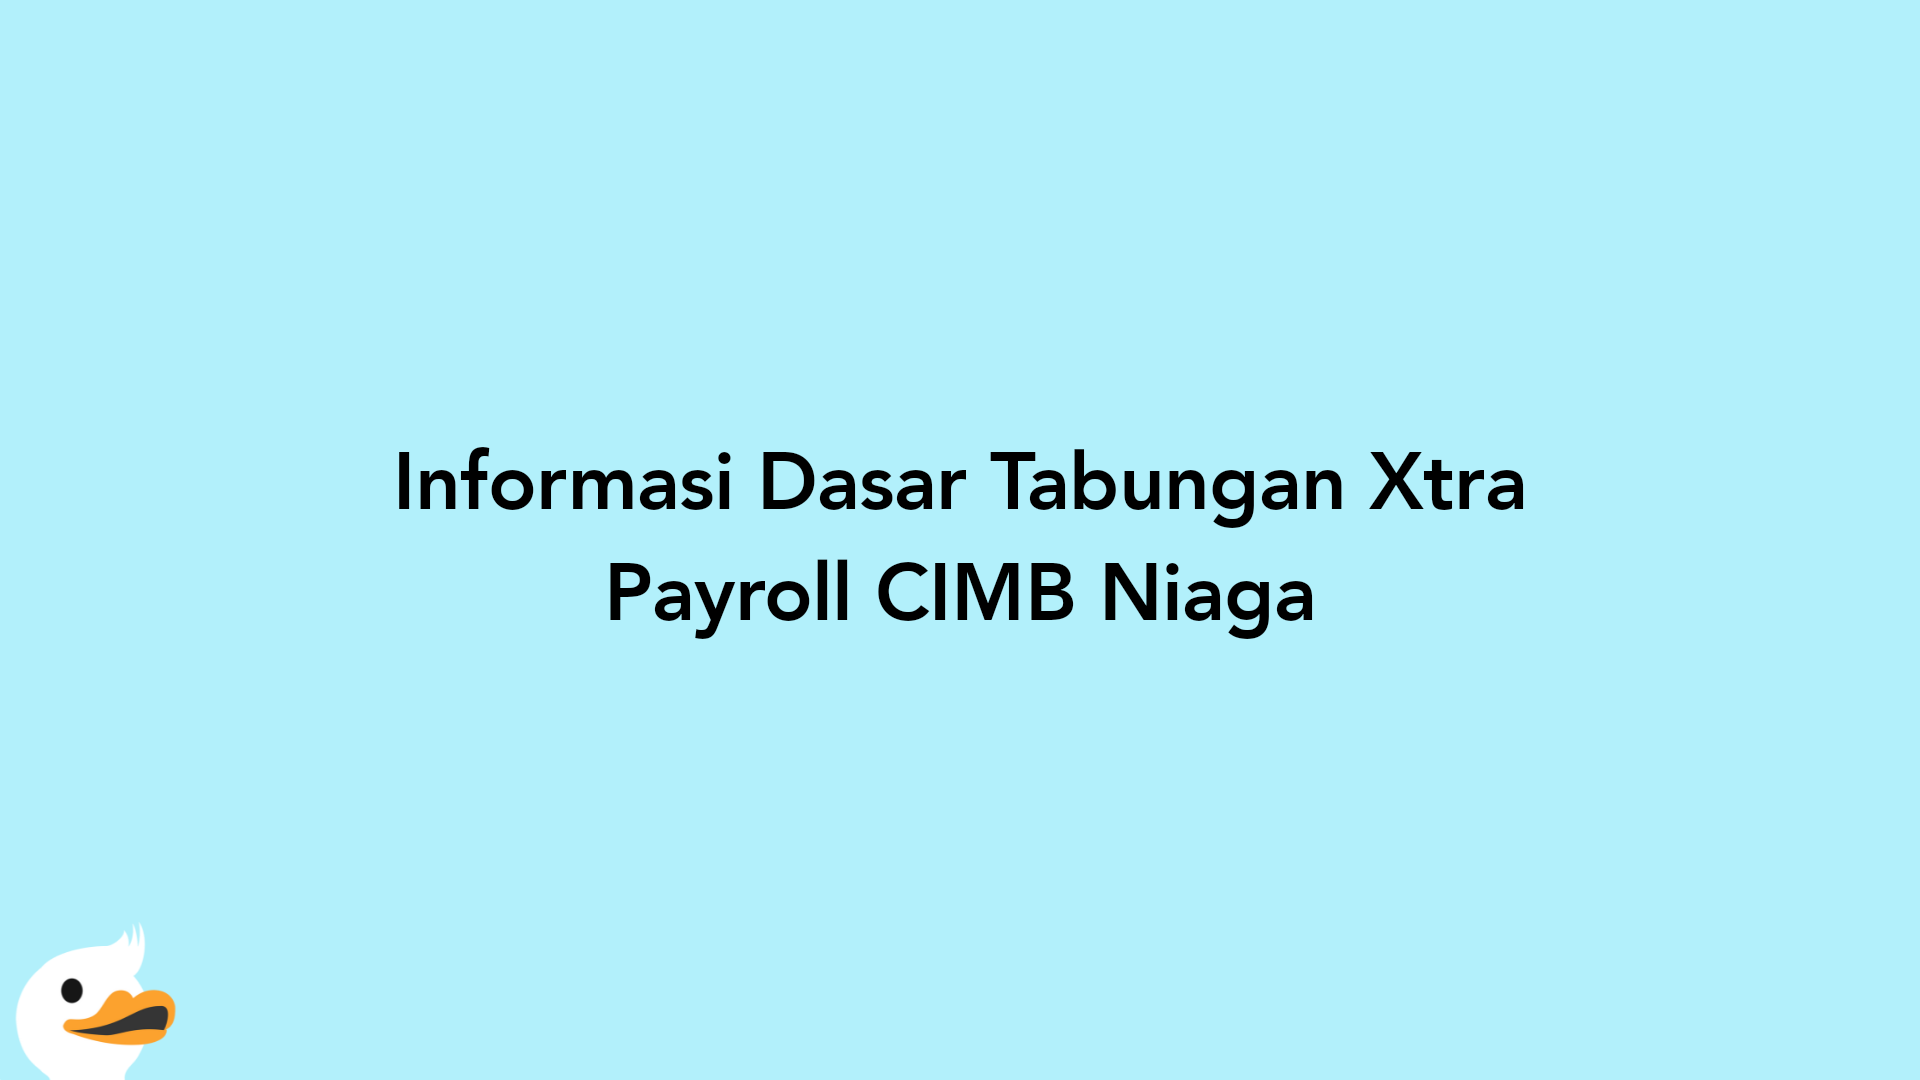 Informasi Dasar Tabungan Xtra Payroll CIMB Niaga